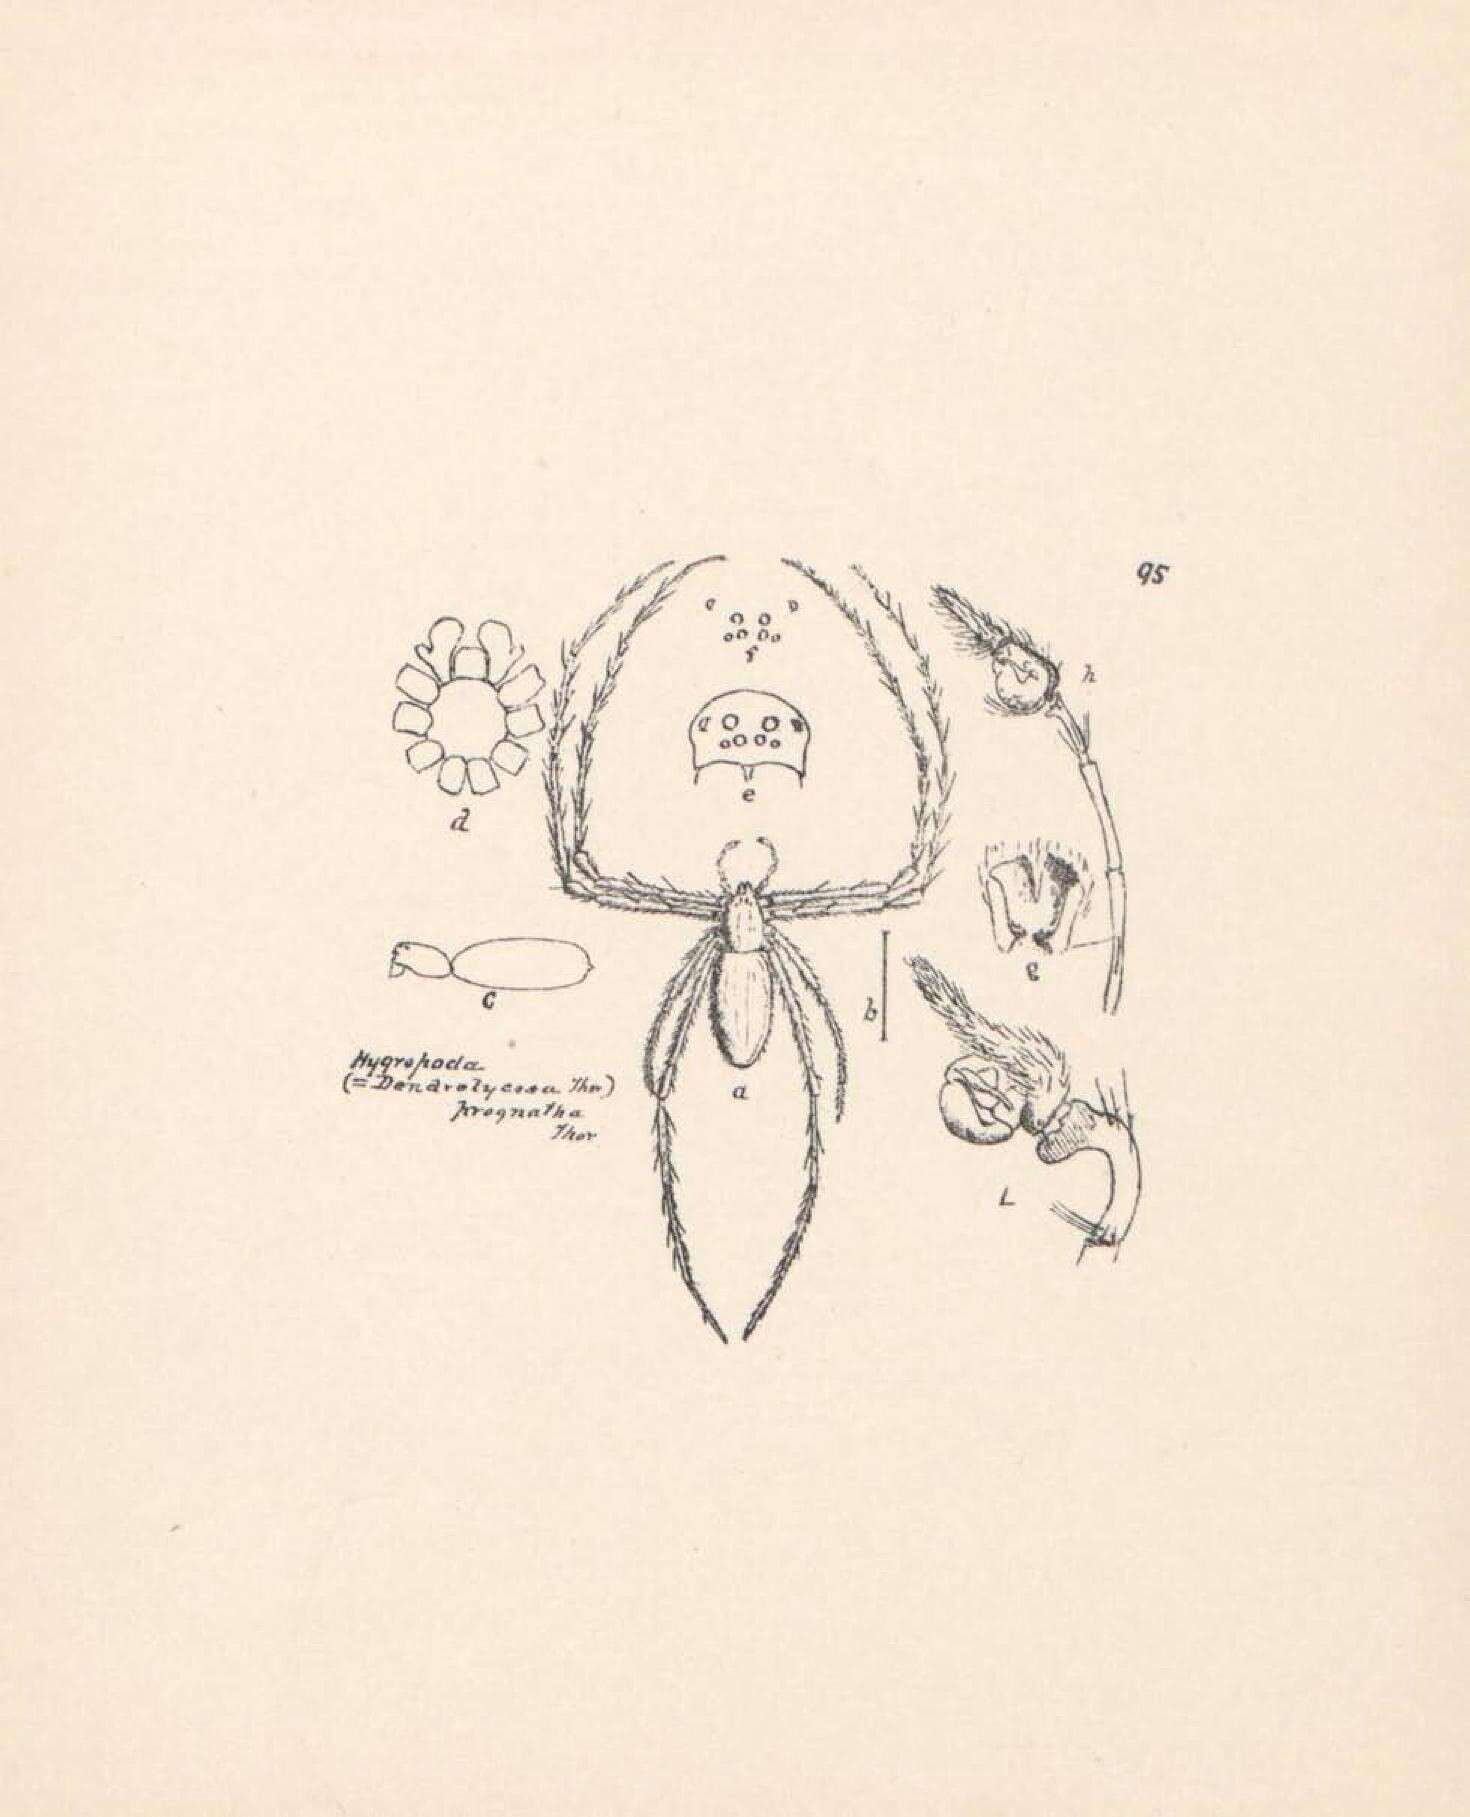 Plancia ëd Hygropoda prognatha Thorell 1894